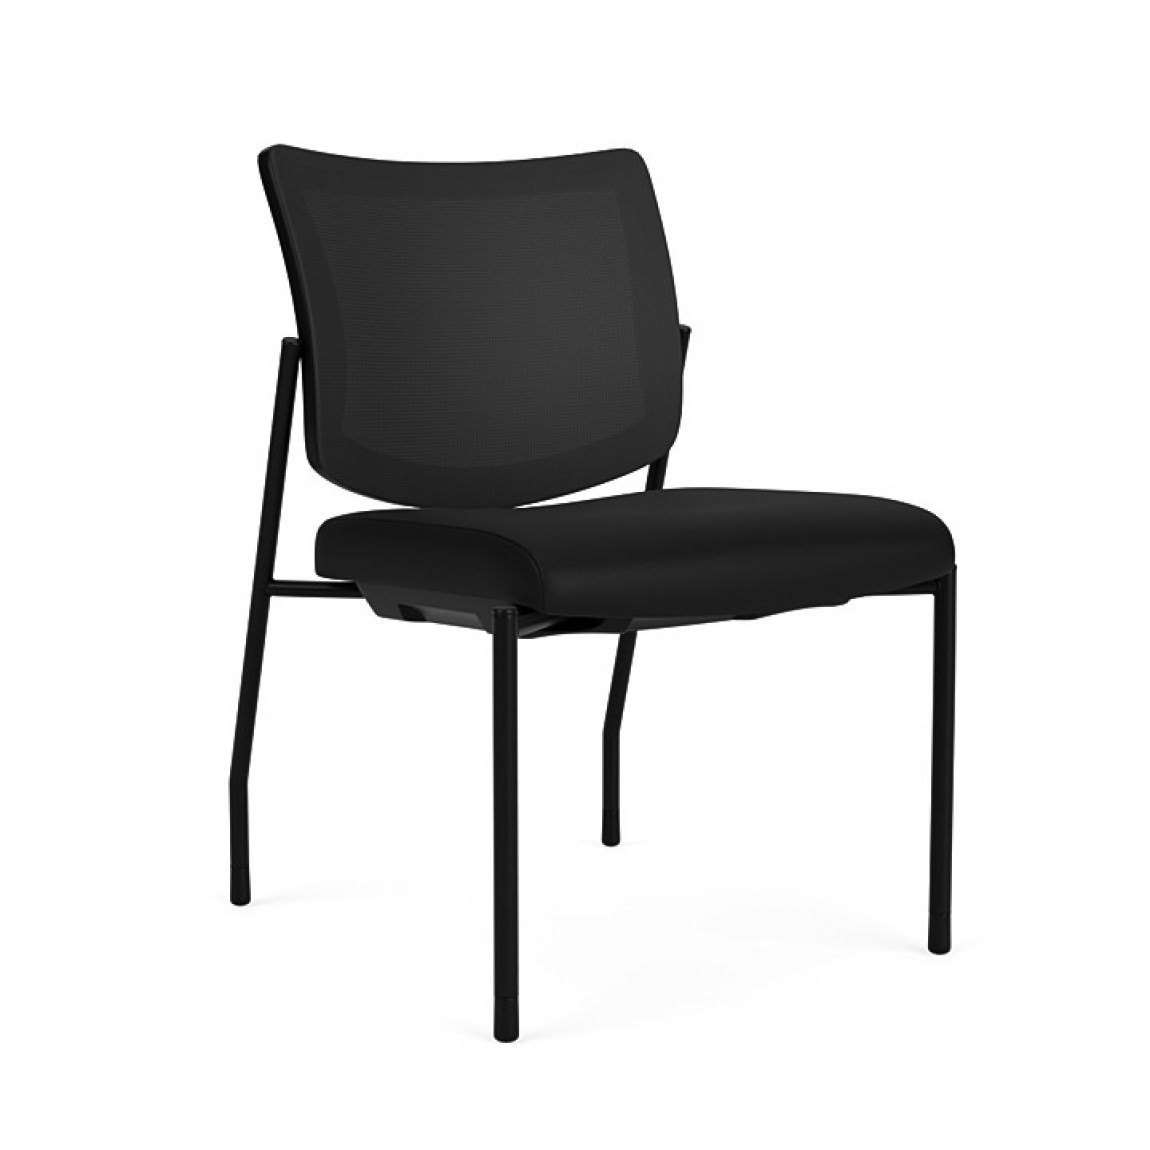 https://madisonliquidators.com/images/p/1150/29841-armless-guest-chair-1.jpg